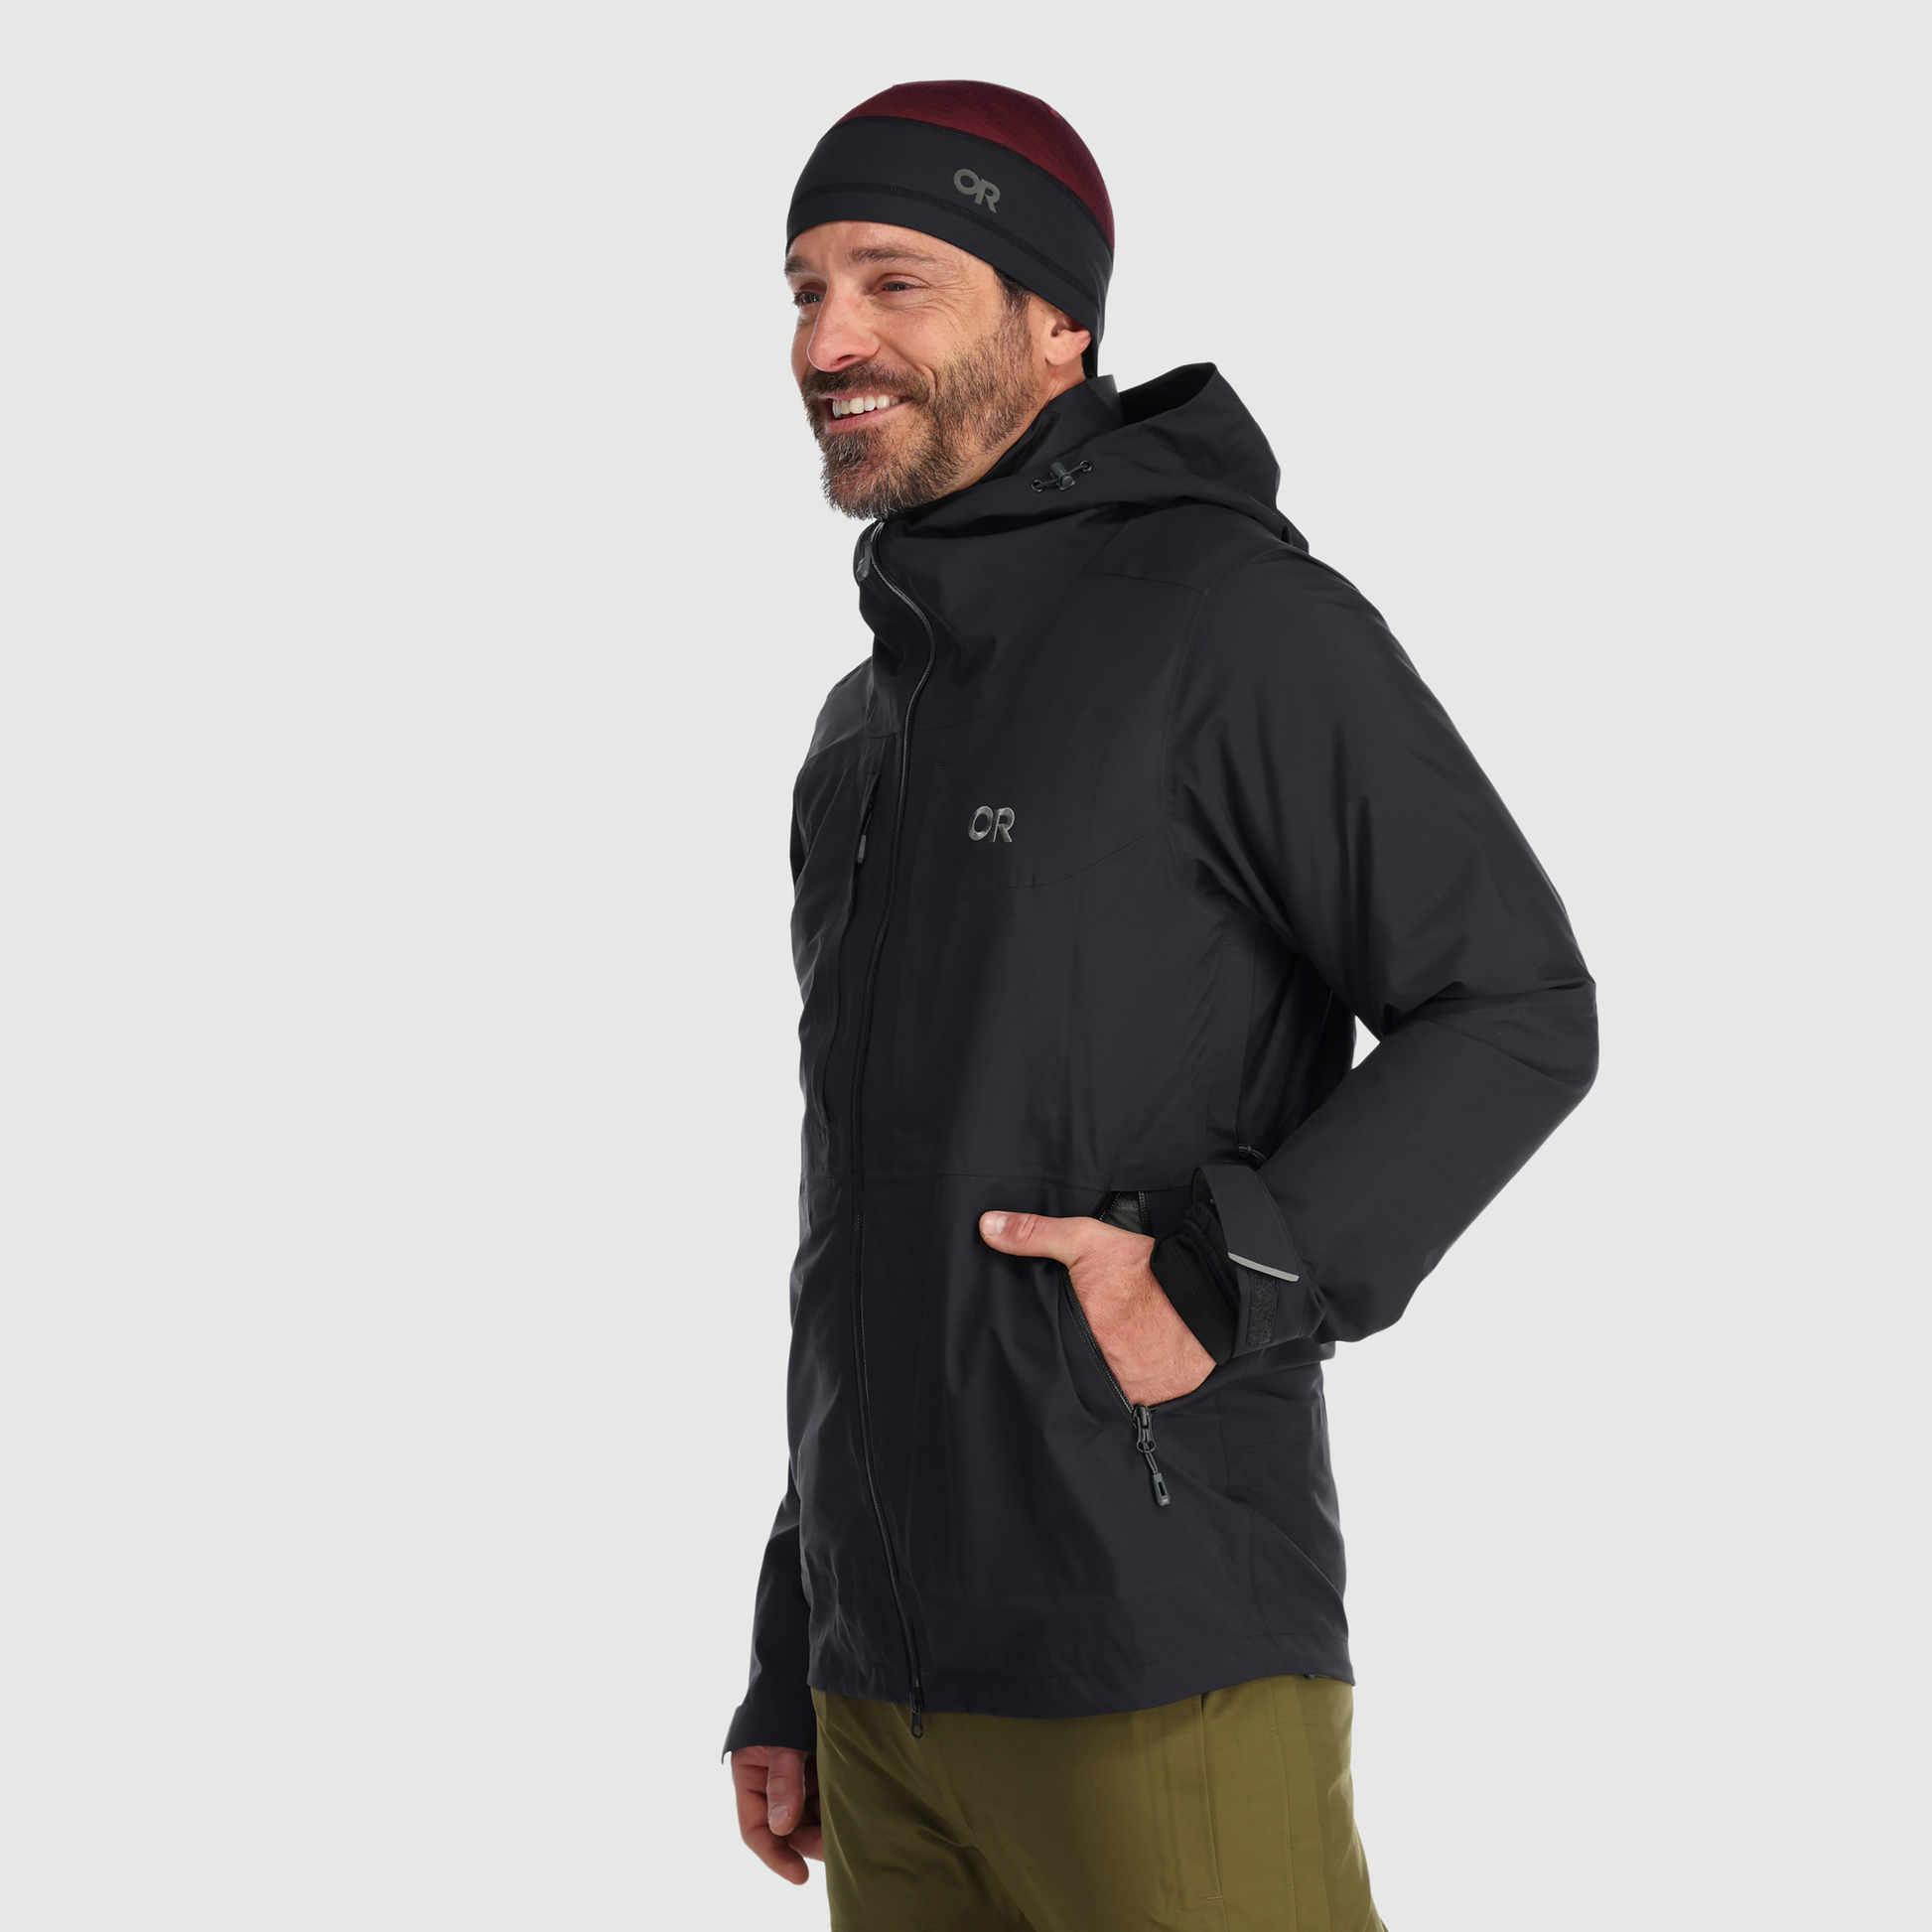 Outdoor Research Men's Carbide Jacket - Small - Black